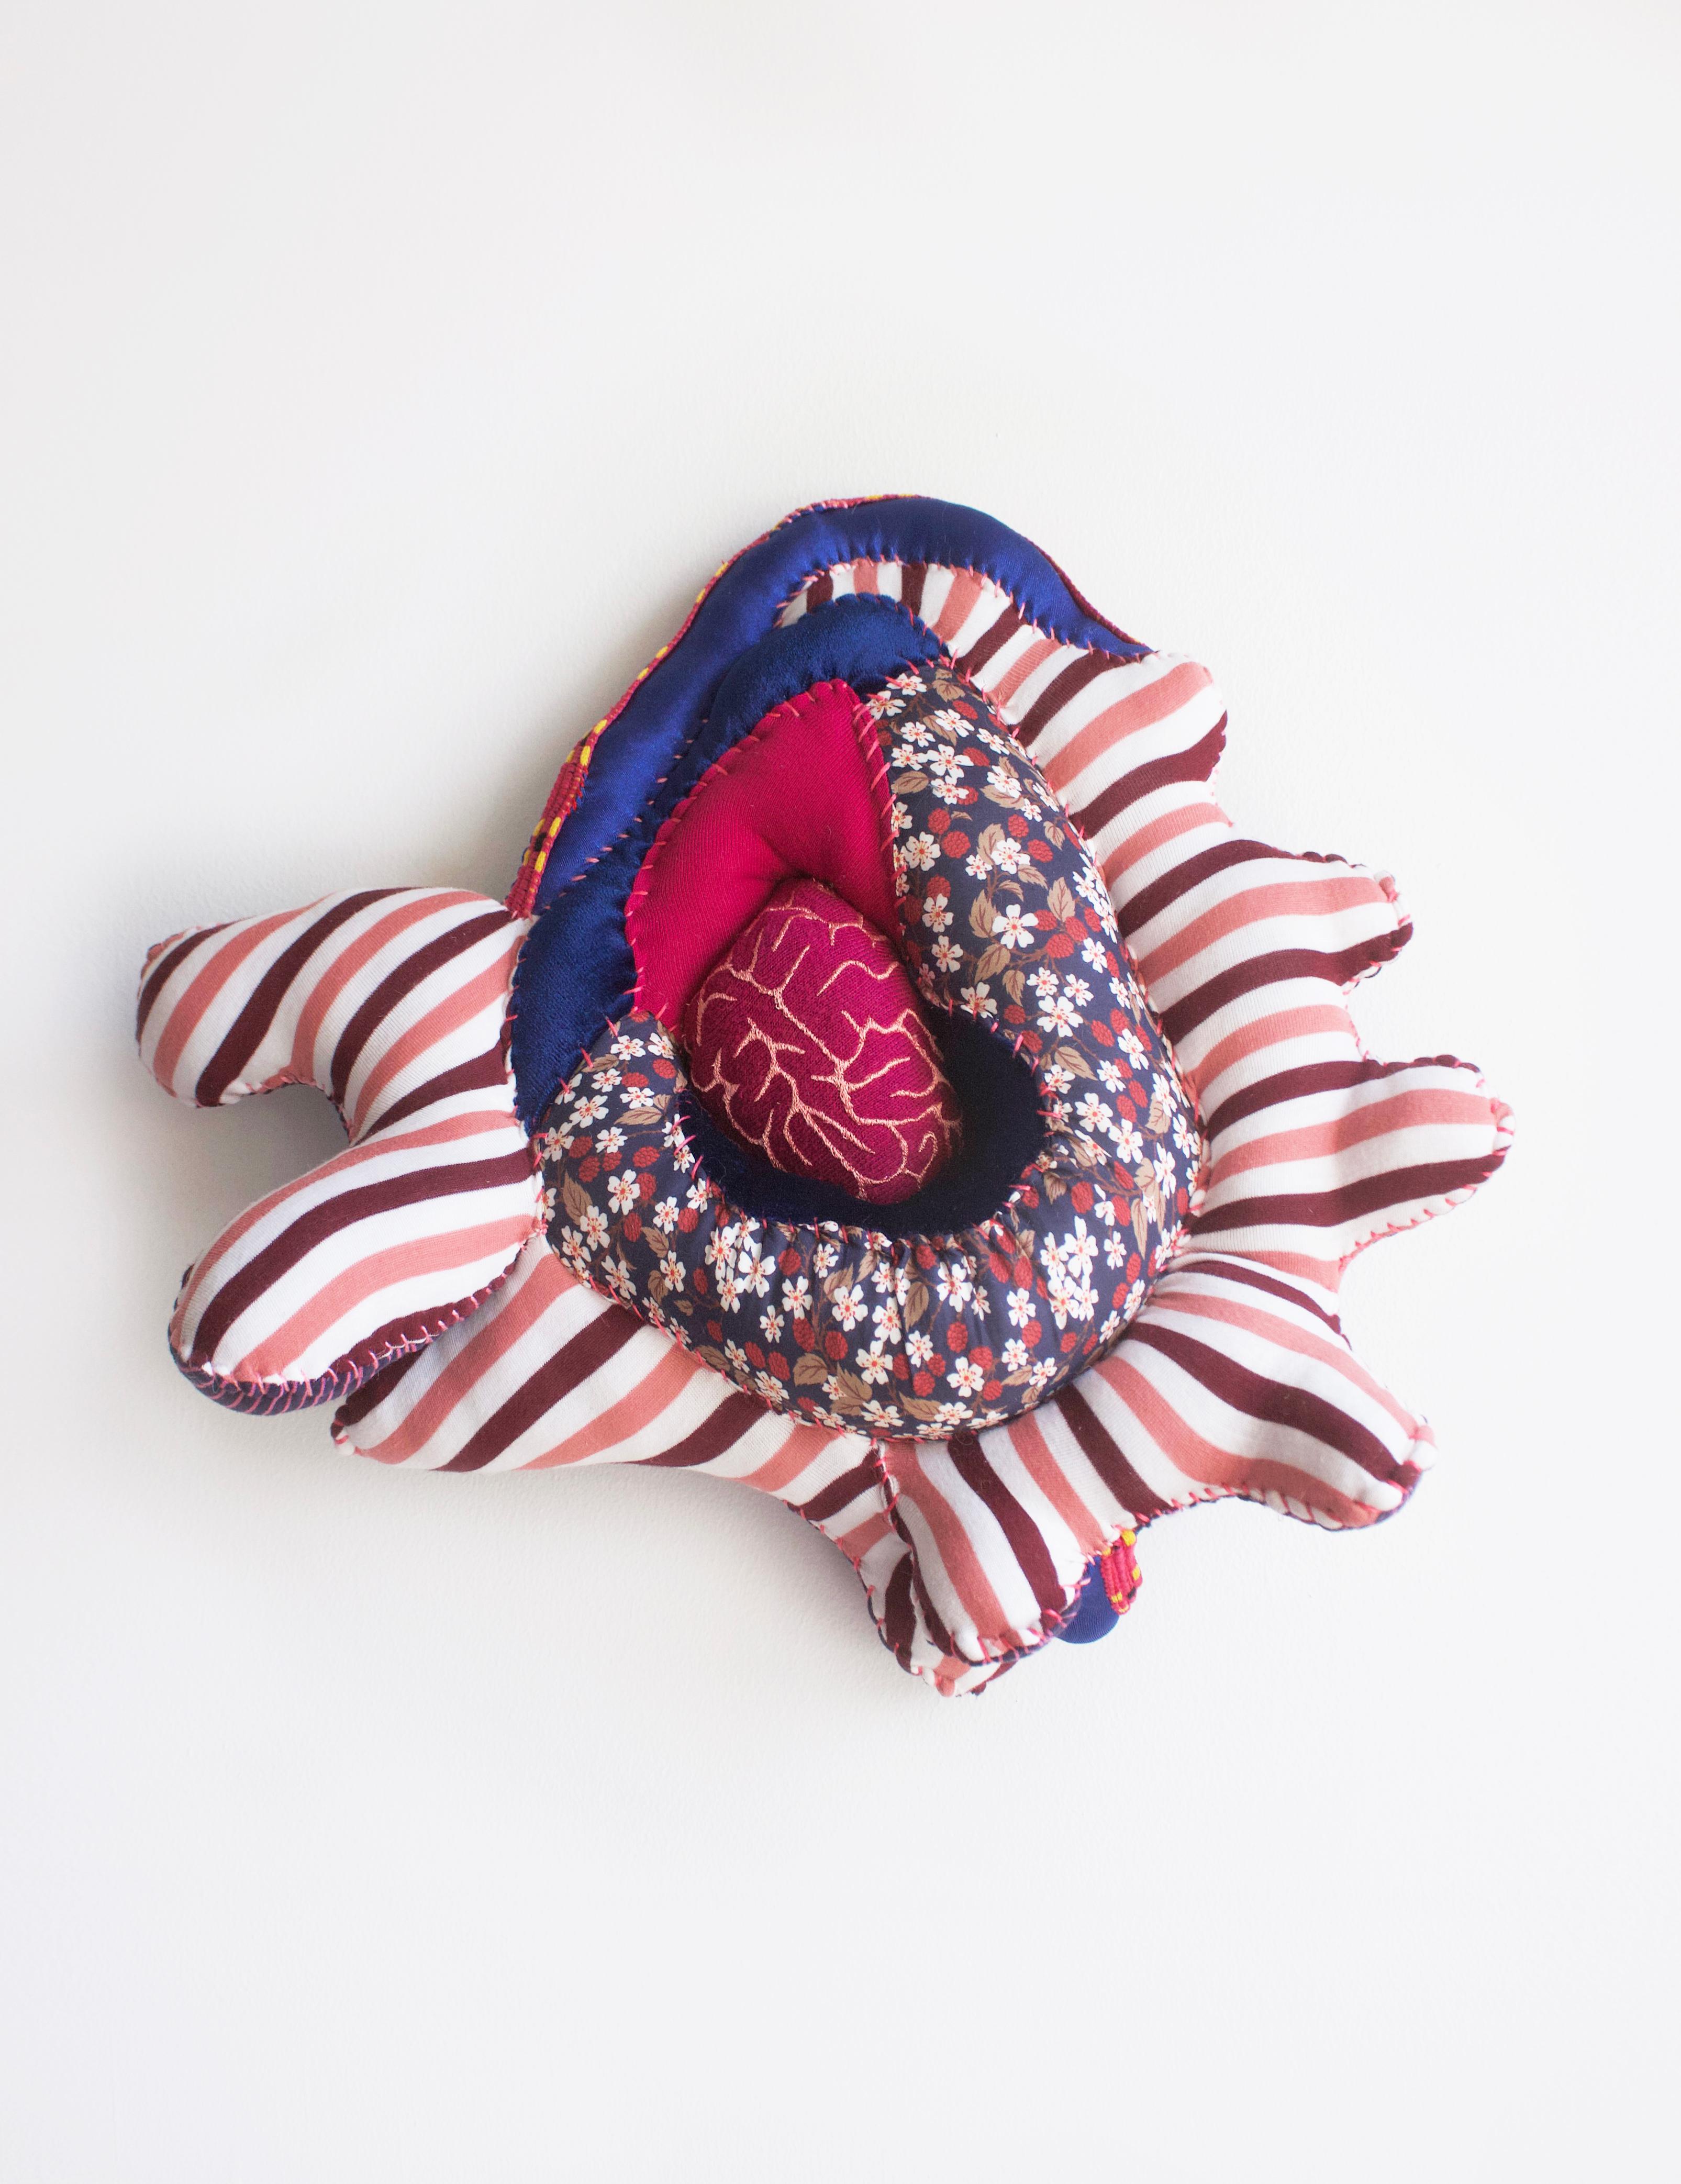 Abstract Sculpture Hanna Washburn - Tapis doux, textile, motif, rose, rouge, bleu, sculpture organique